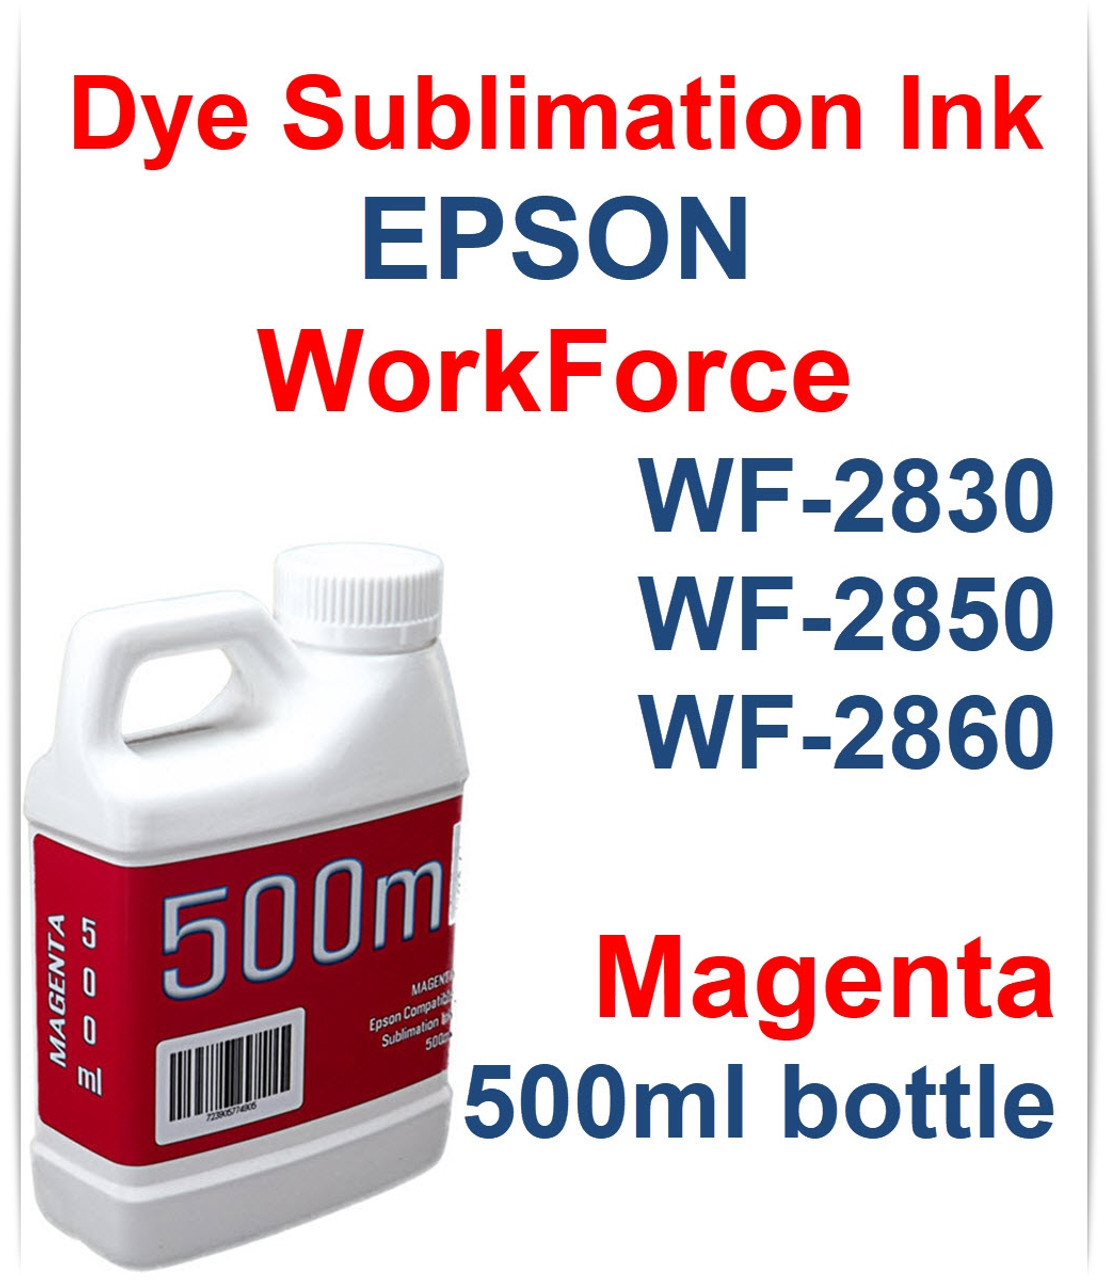 Magenta 500ml bottle Dye Sublimation Ink for Epson WorkForce WF-2830 WF-2850 WF-2860 Printers